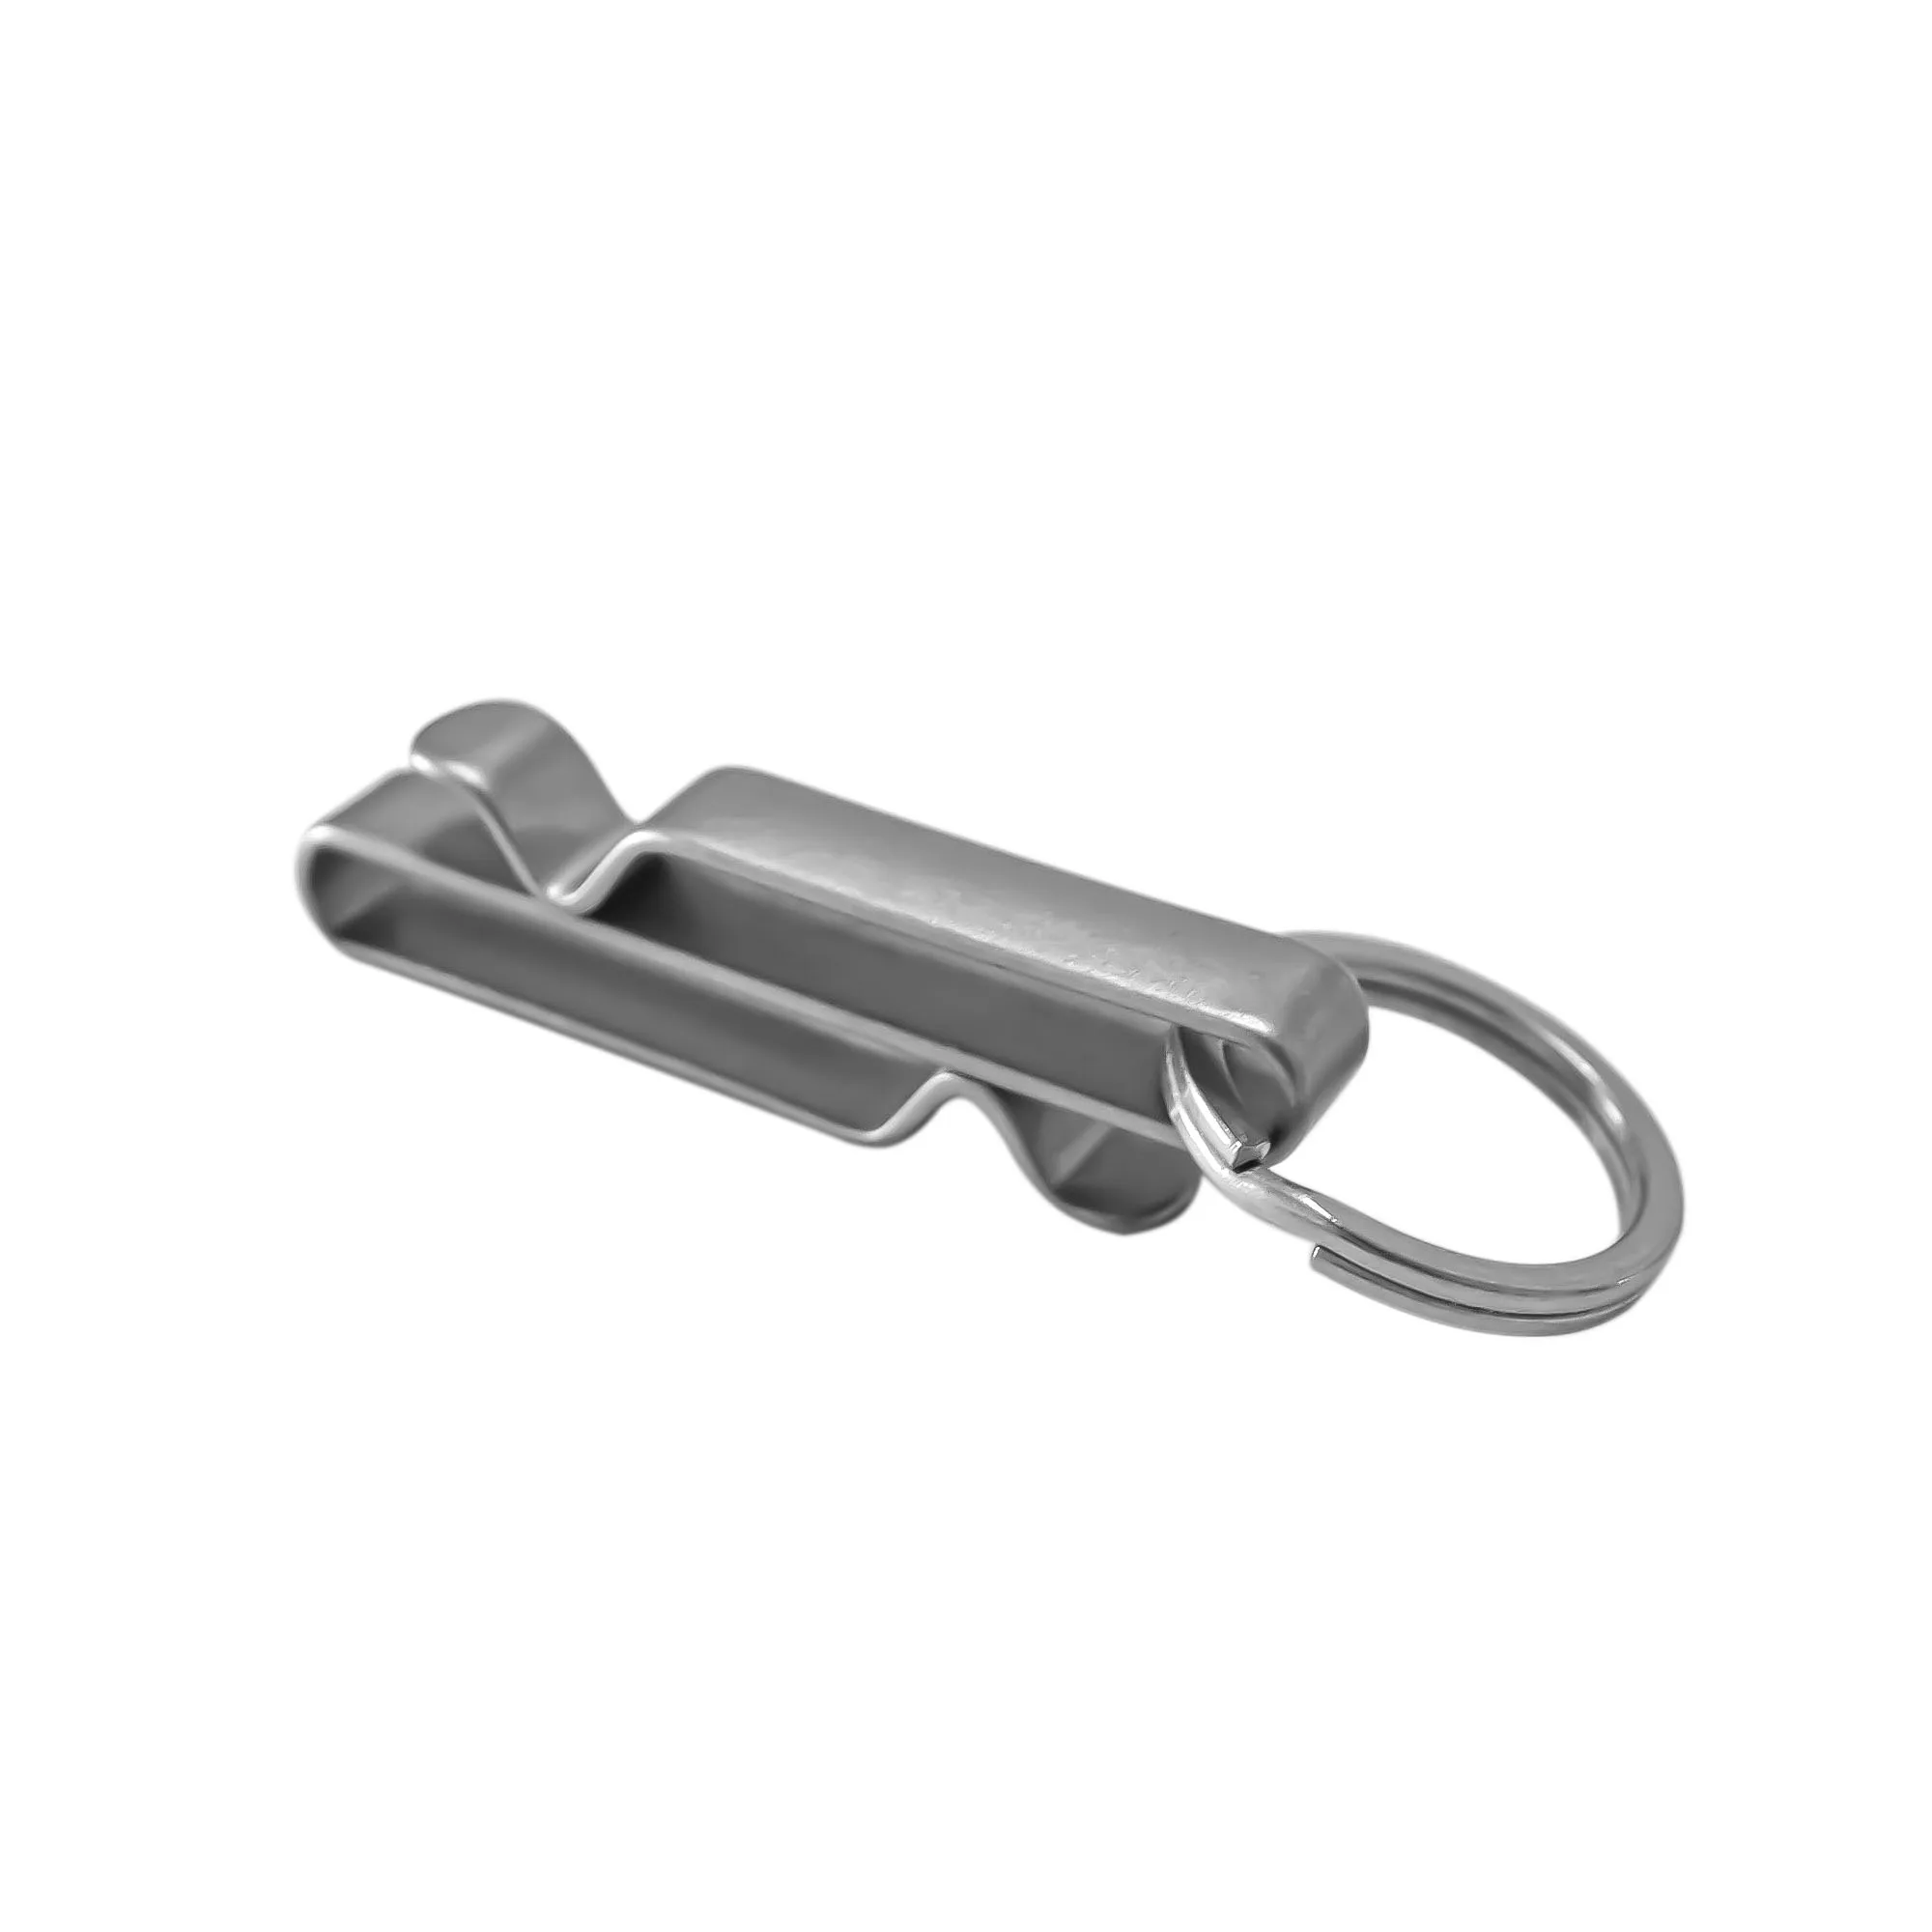 Titanium Quick Release Keychain Clip Multi Tools for Belt Key